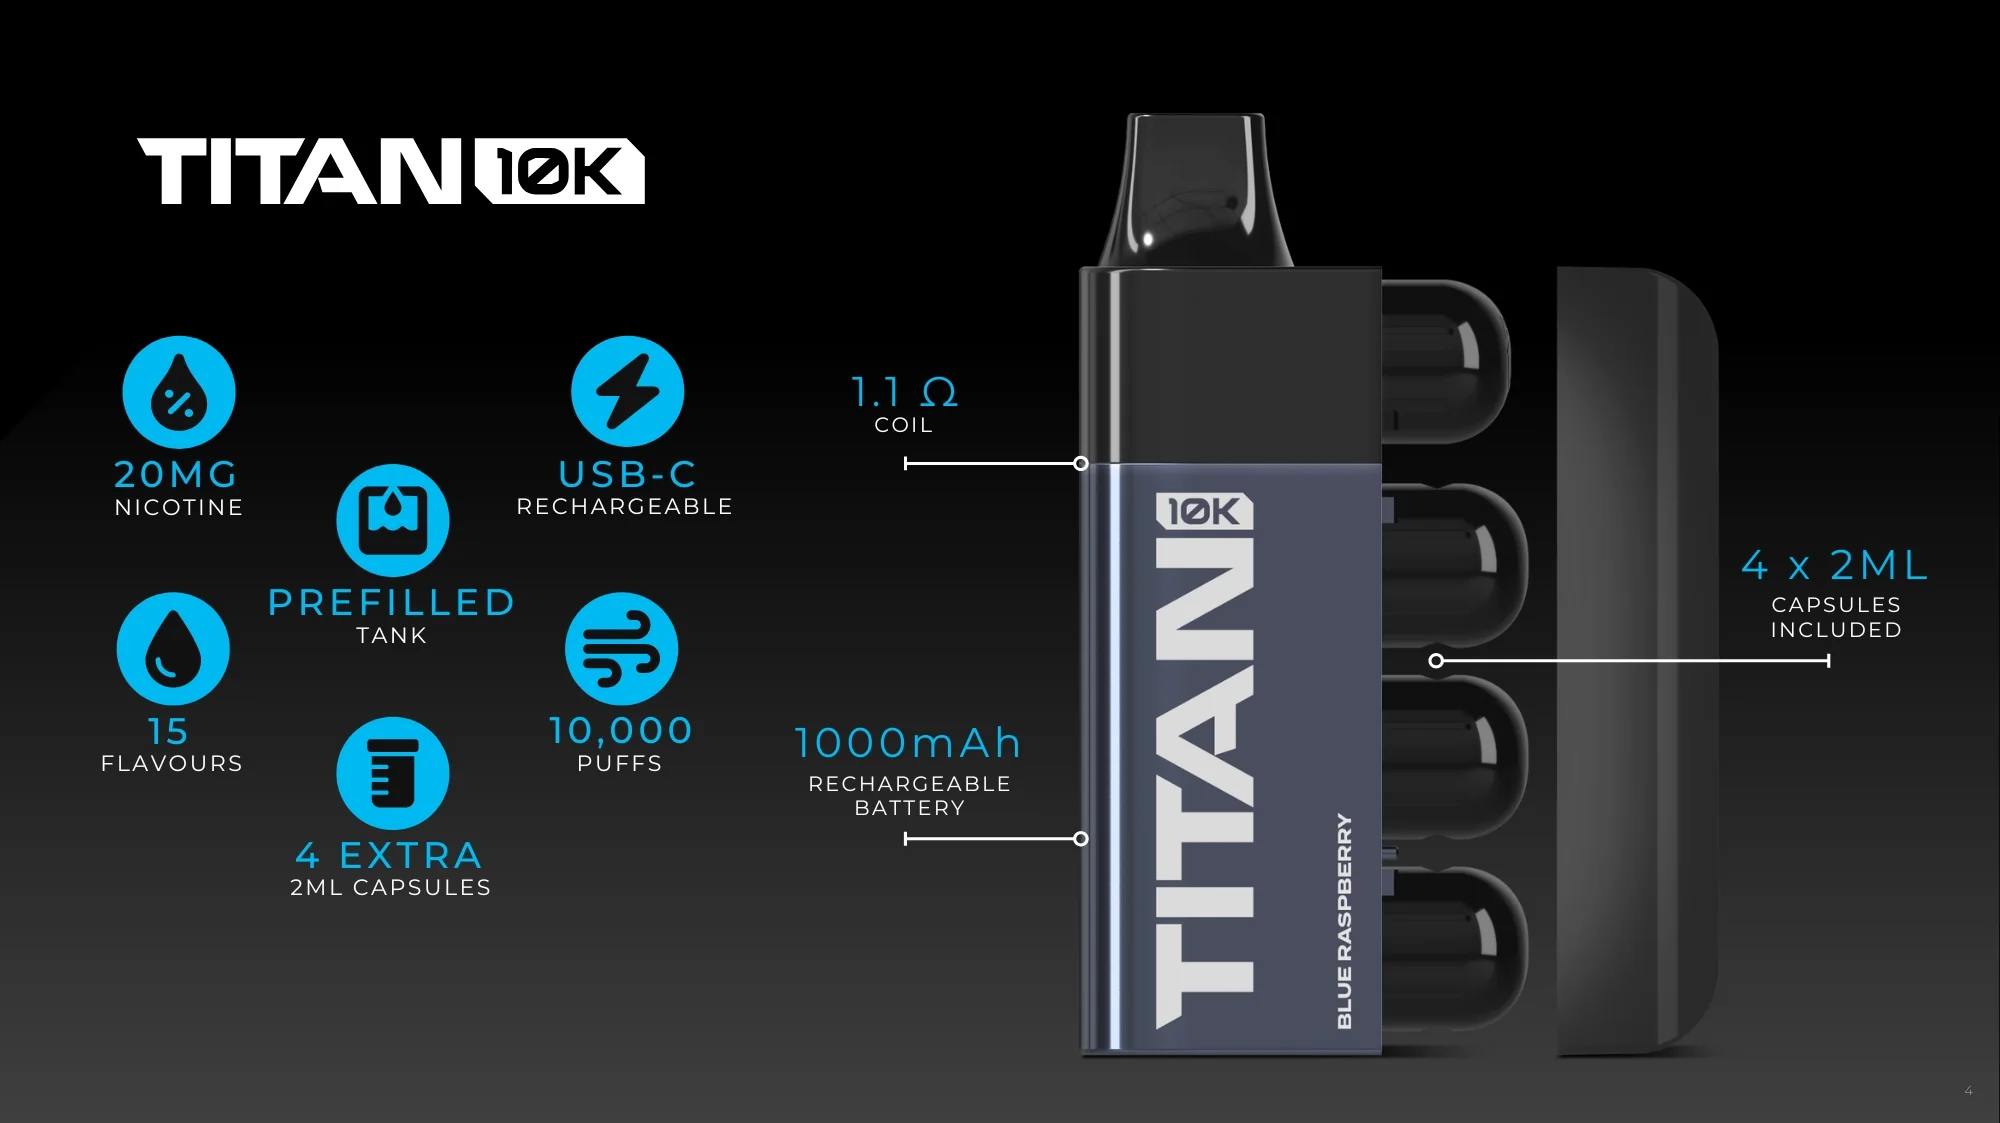 Titan 10k Features